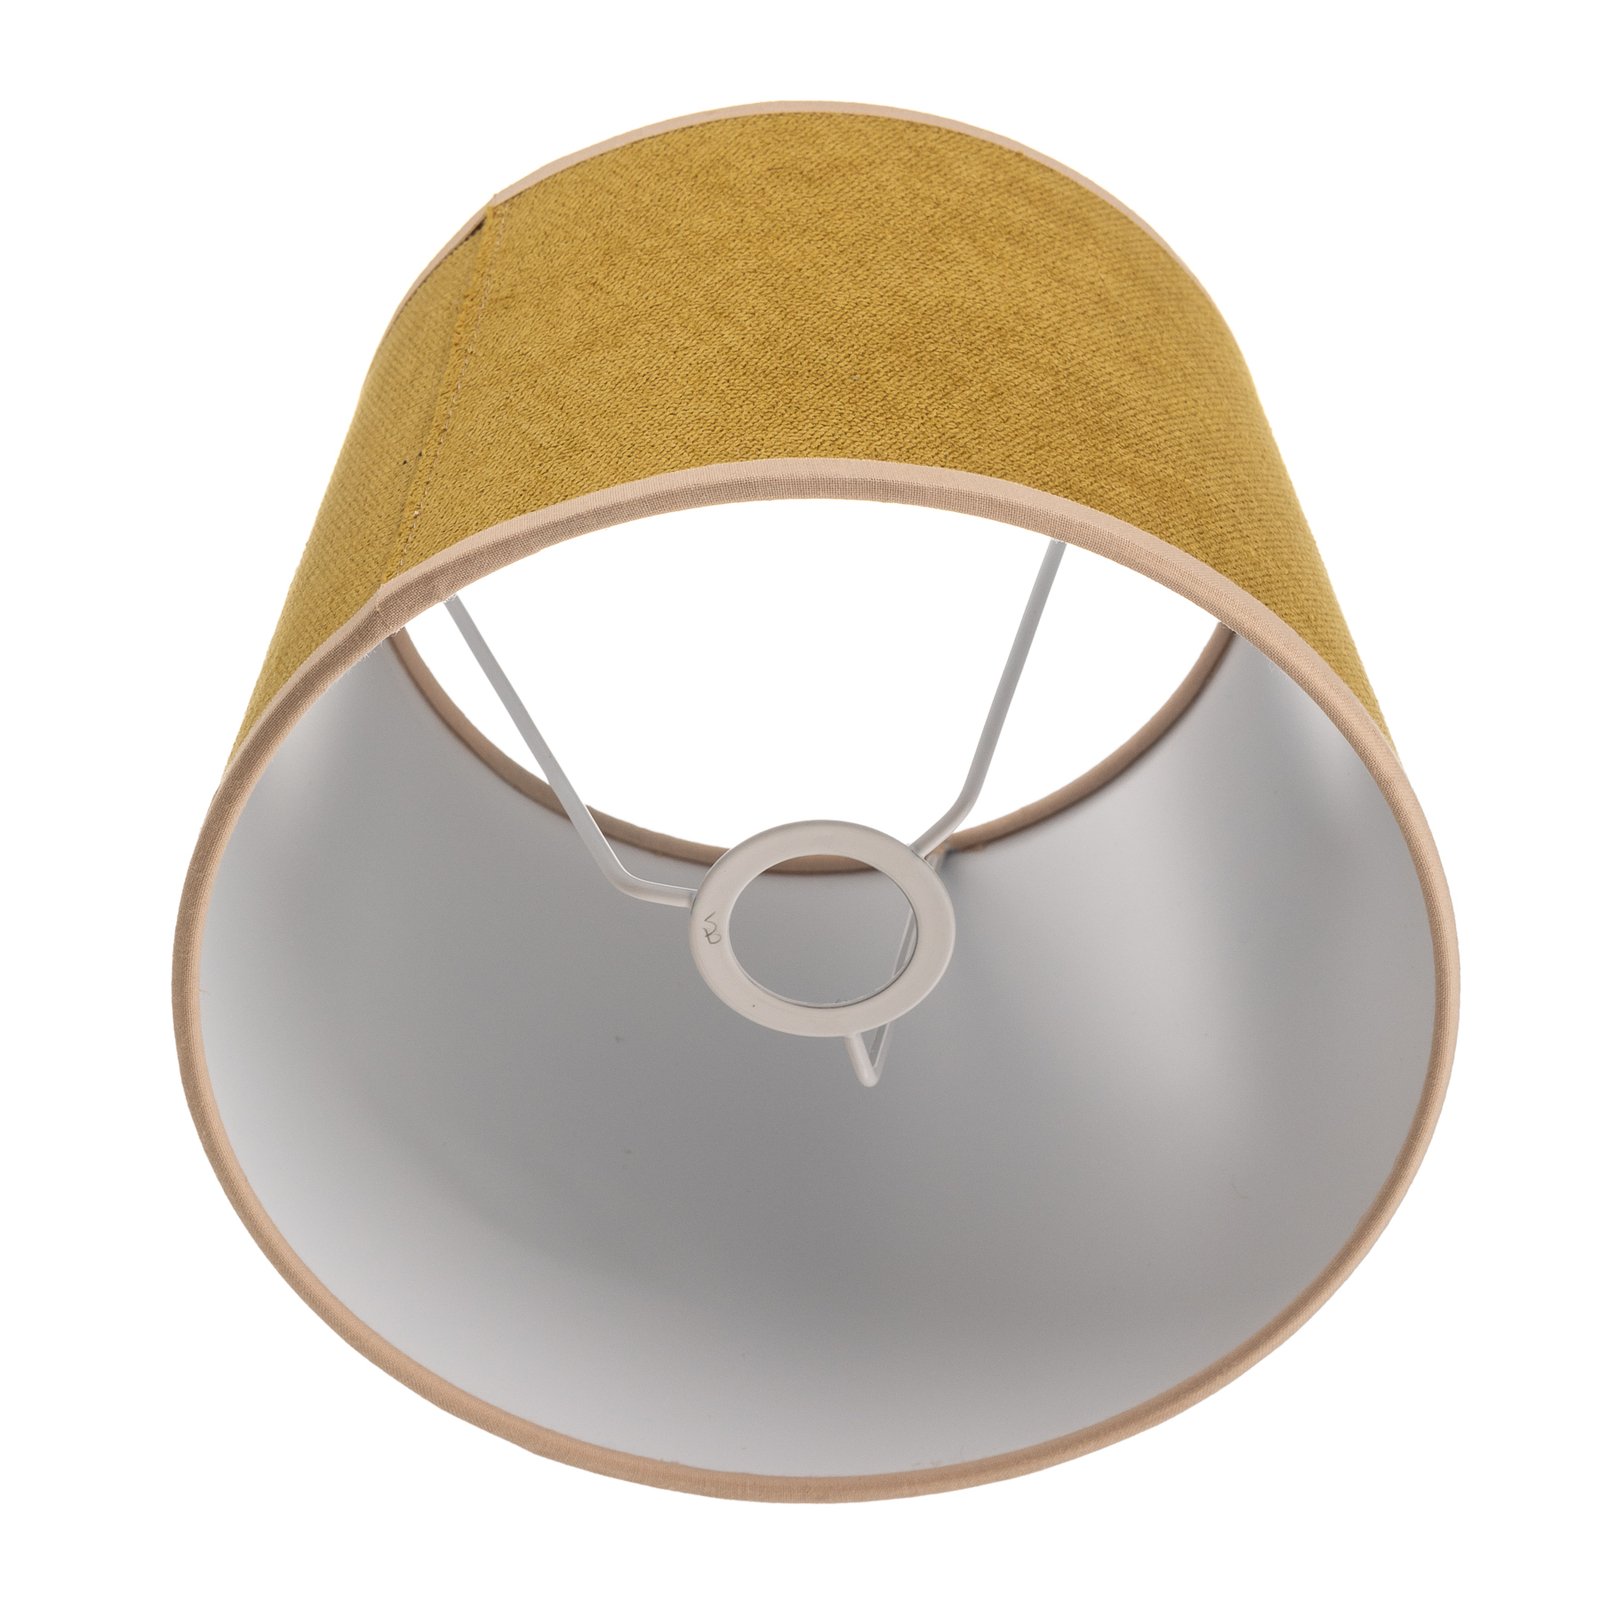 Classic S lampshade, woven, mustard yellow